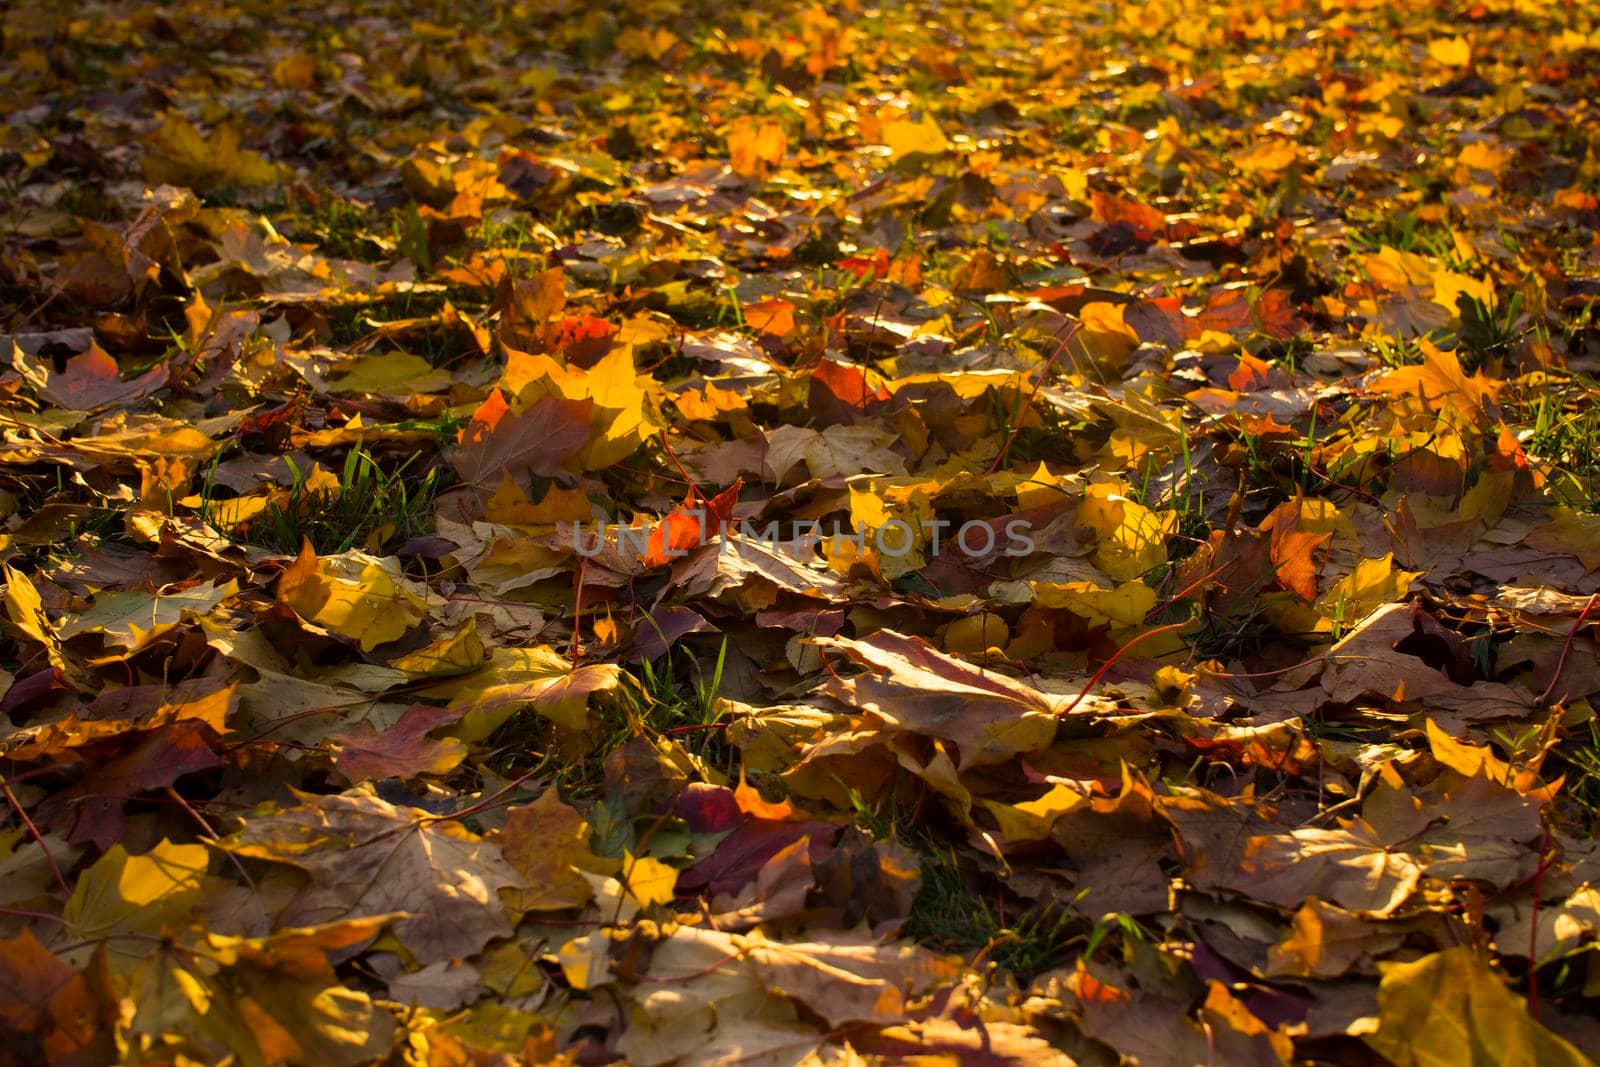 Autumn foliage. Autumn leaves fallen on the ground. Fall leaf. High quality photo